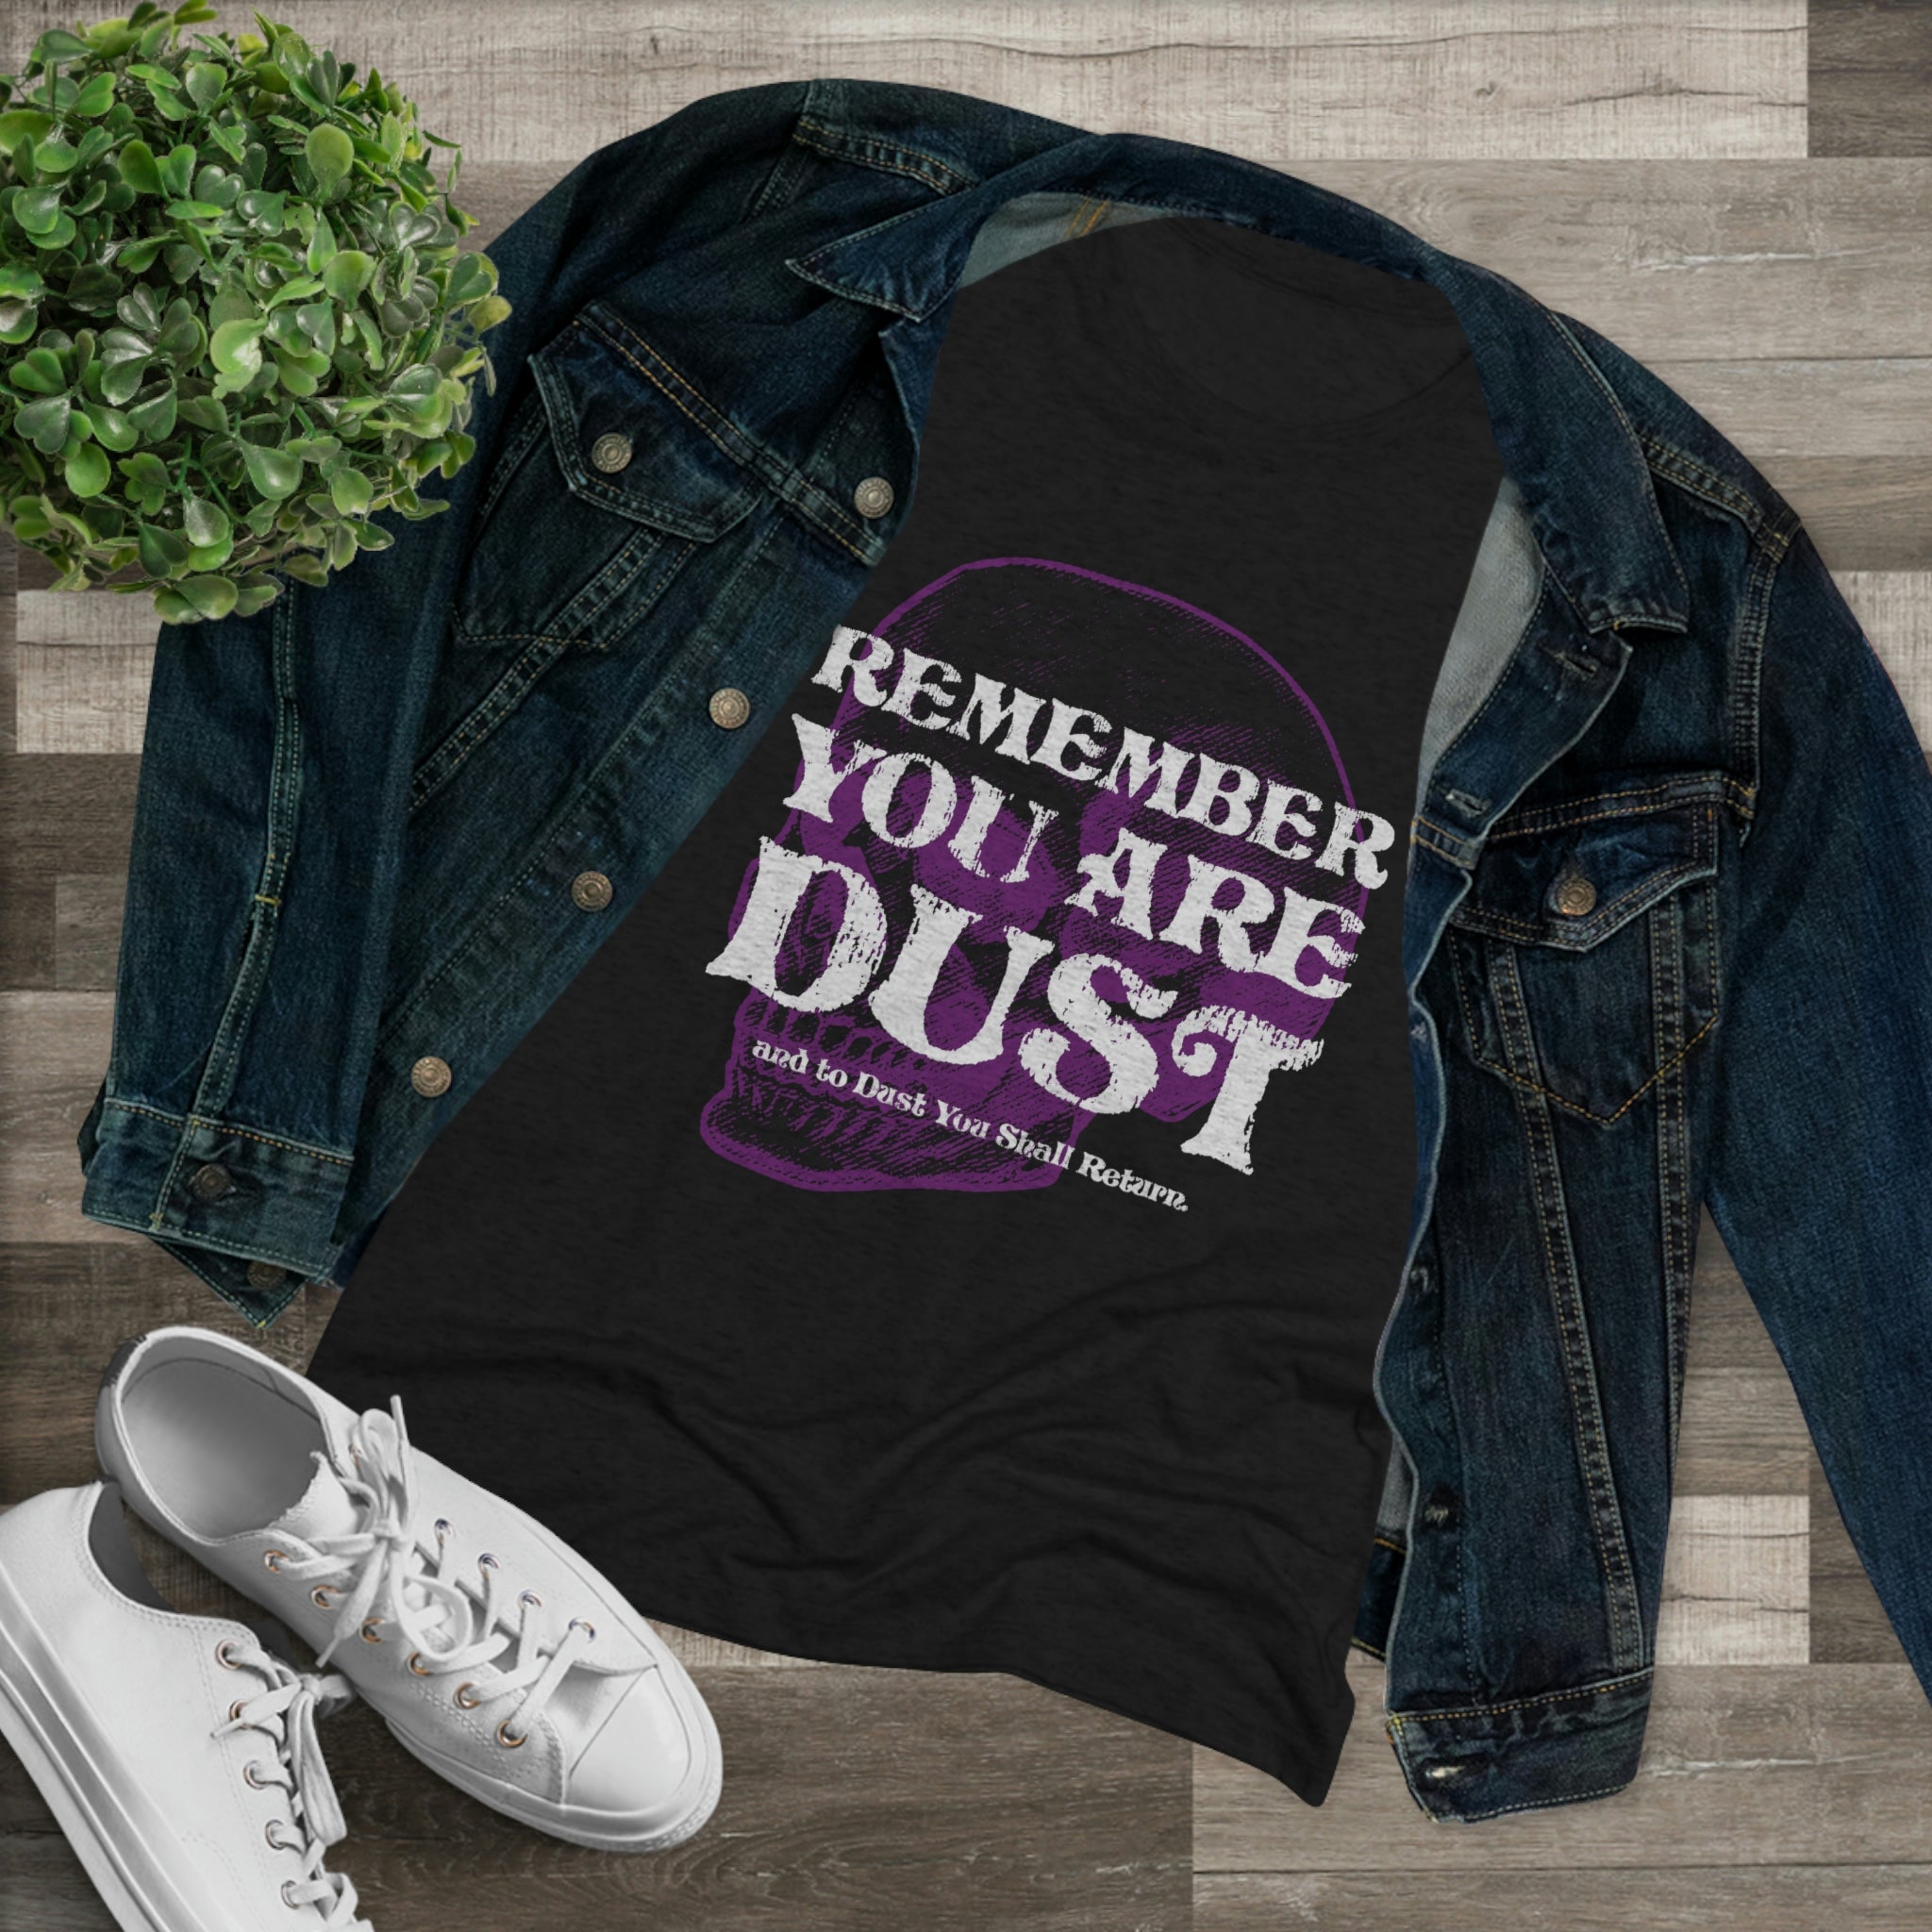 Women's You Are Dust Premium T-shirt